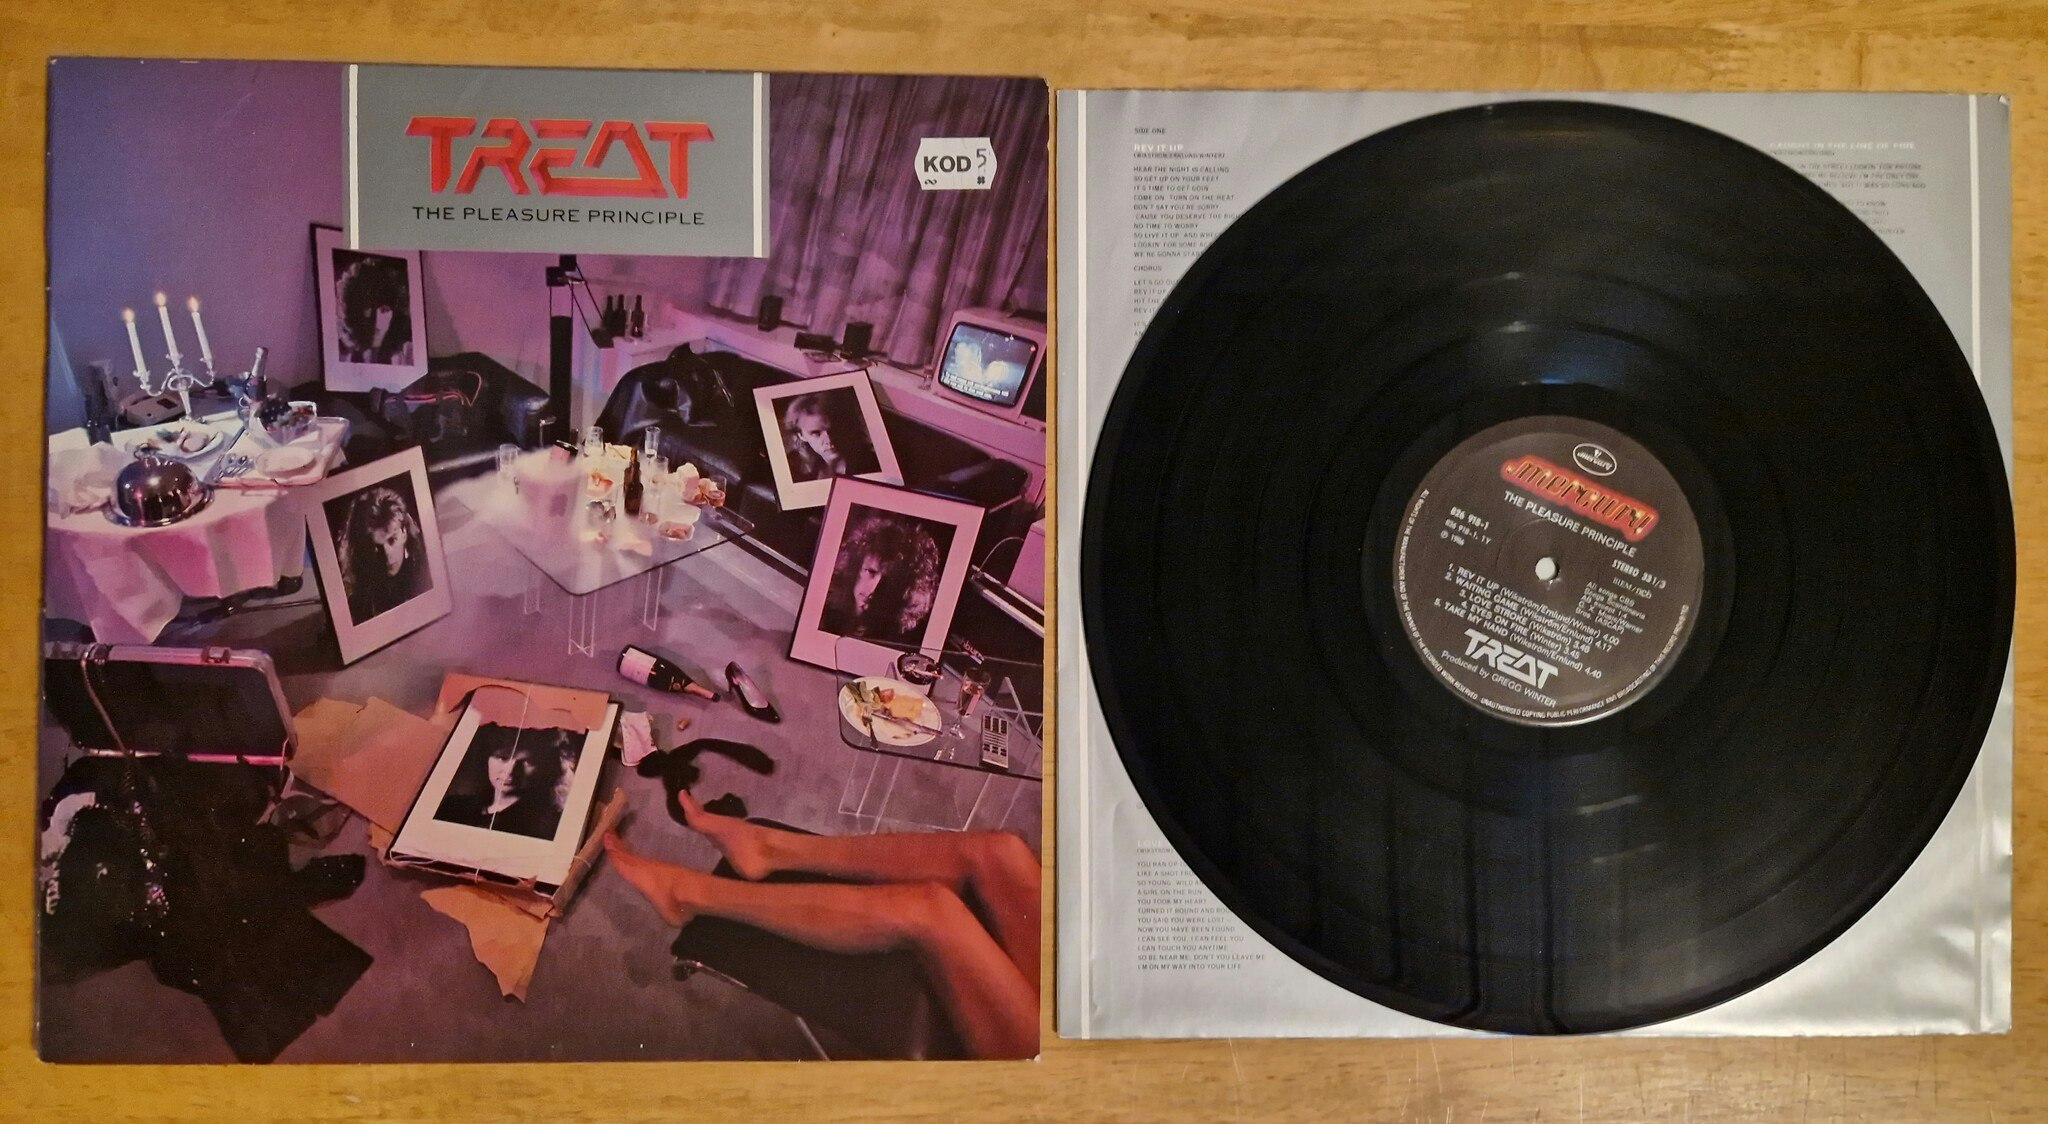 Treat, The pleasure principle. Vinyl LP